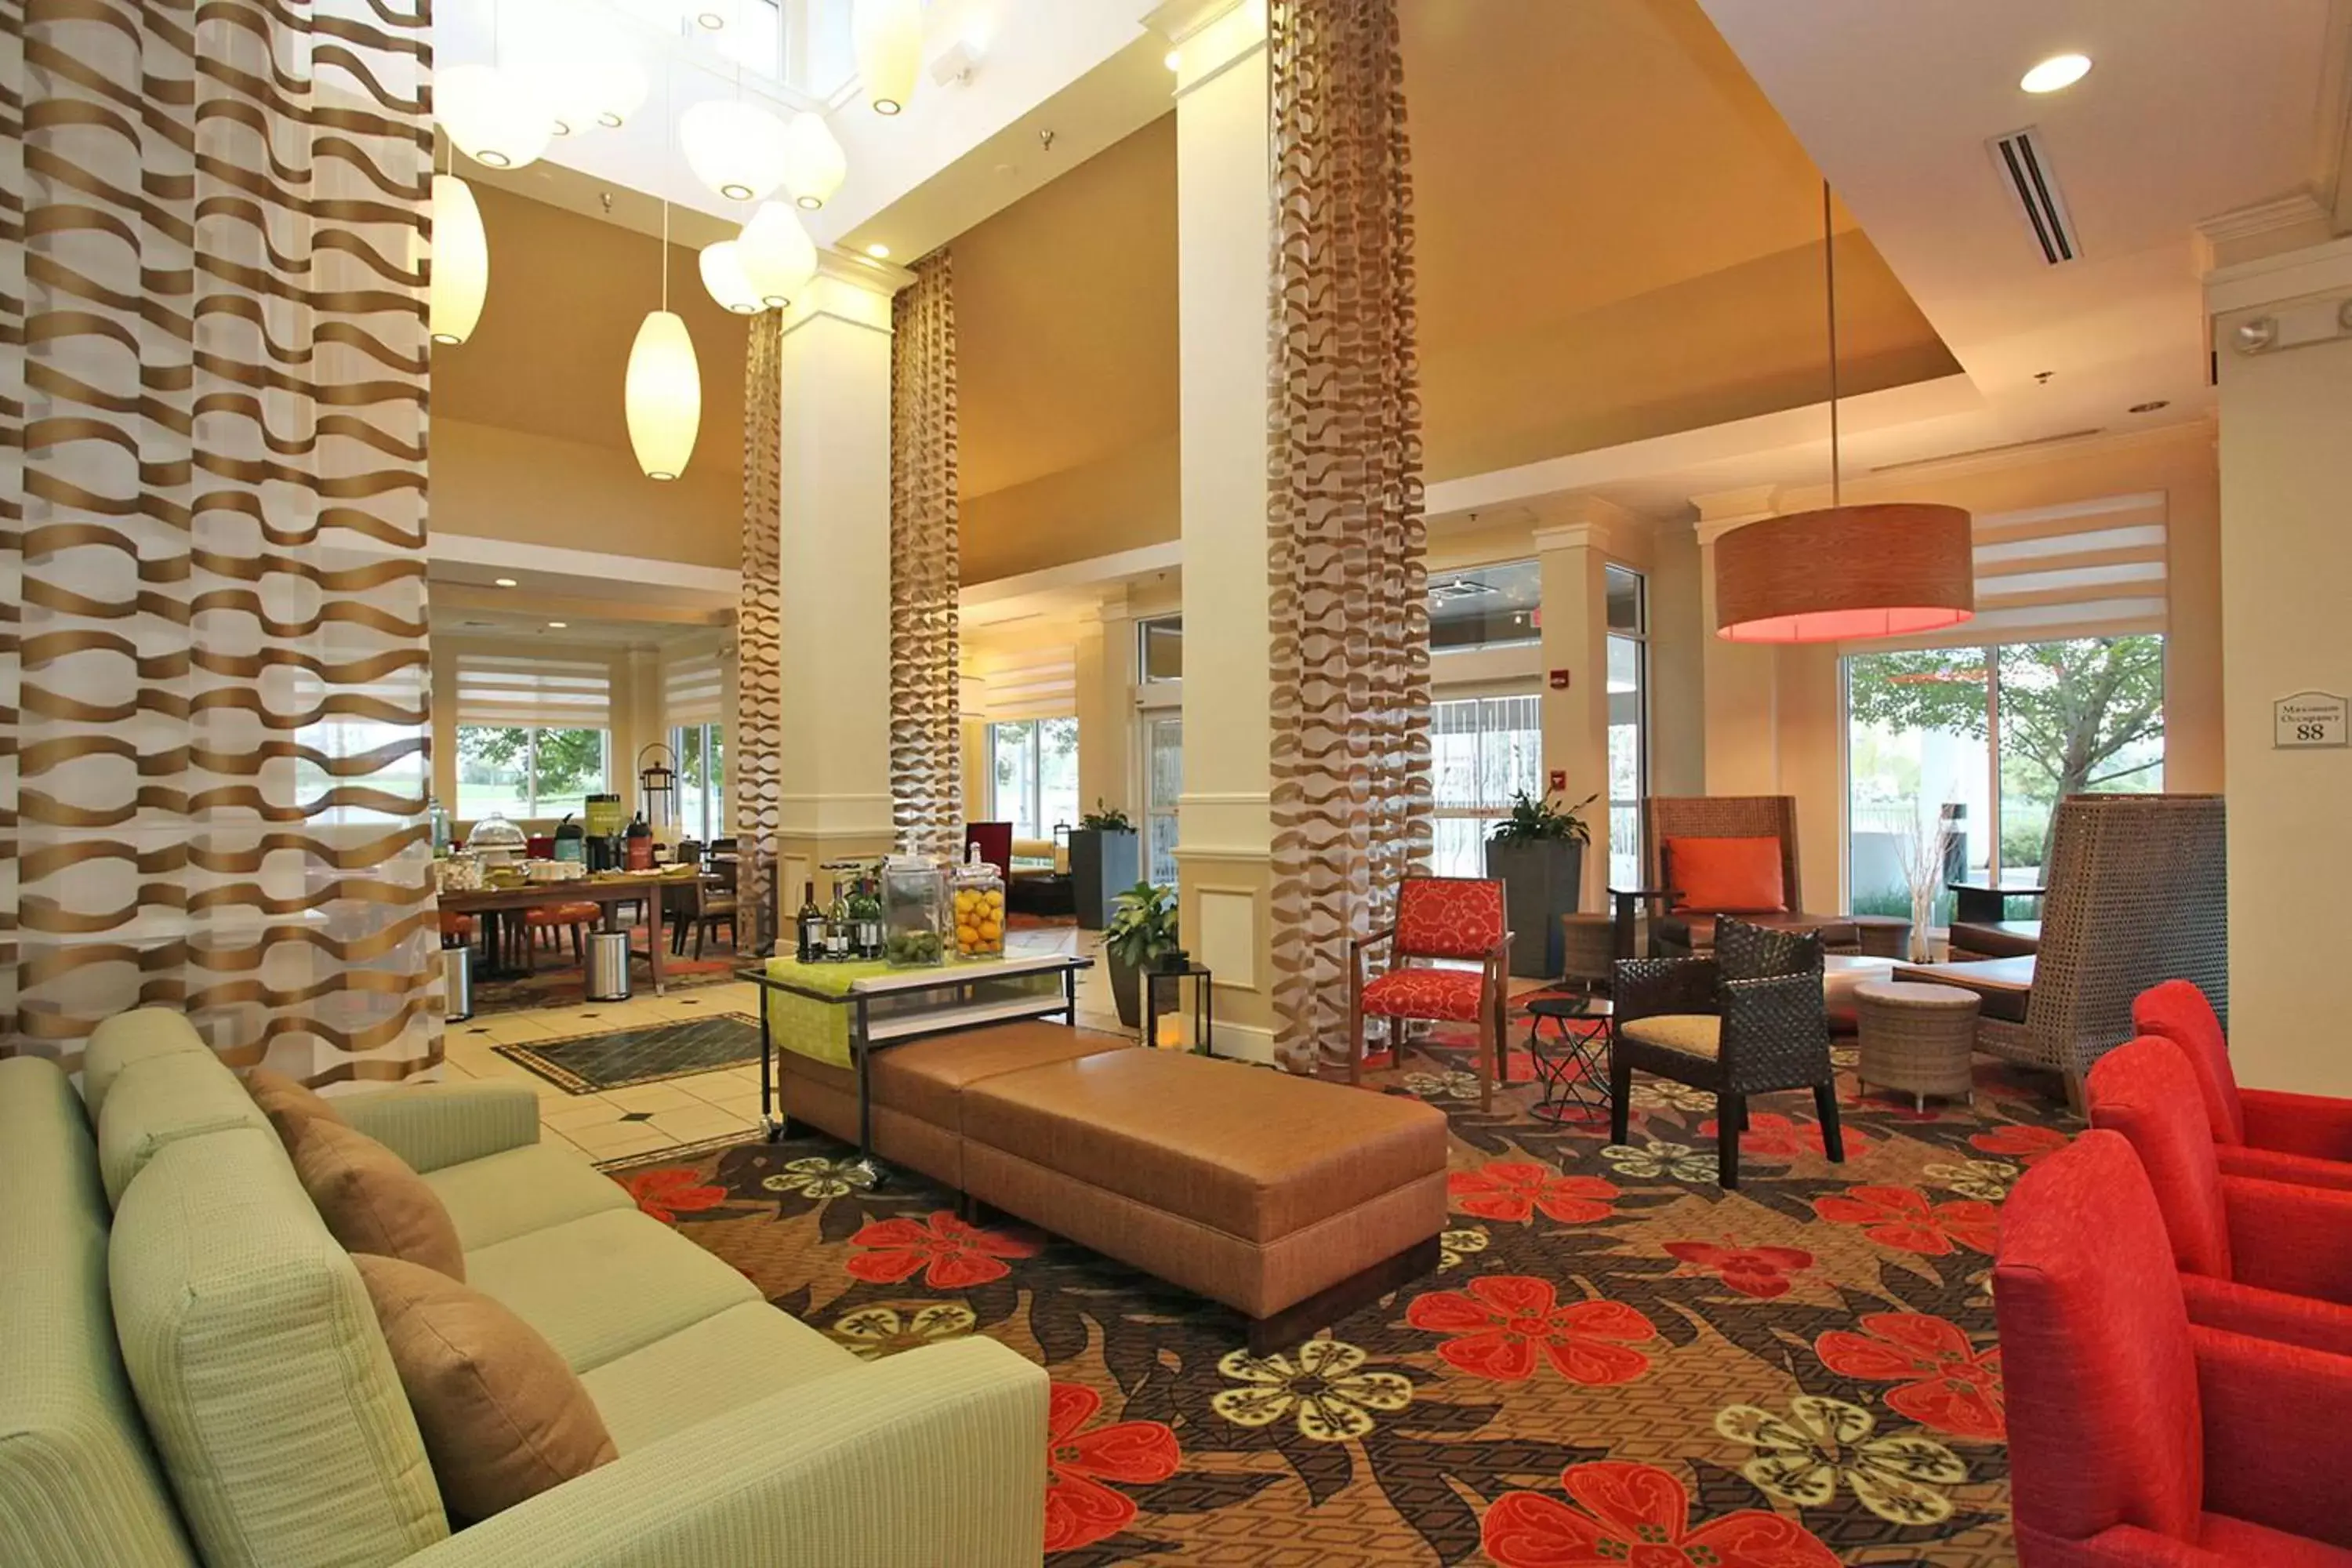 Lobby or reception in Hilton Garden Inn Chesterton